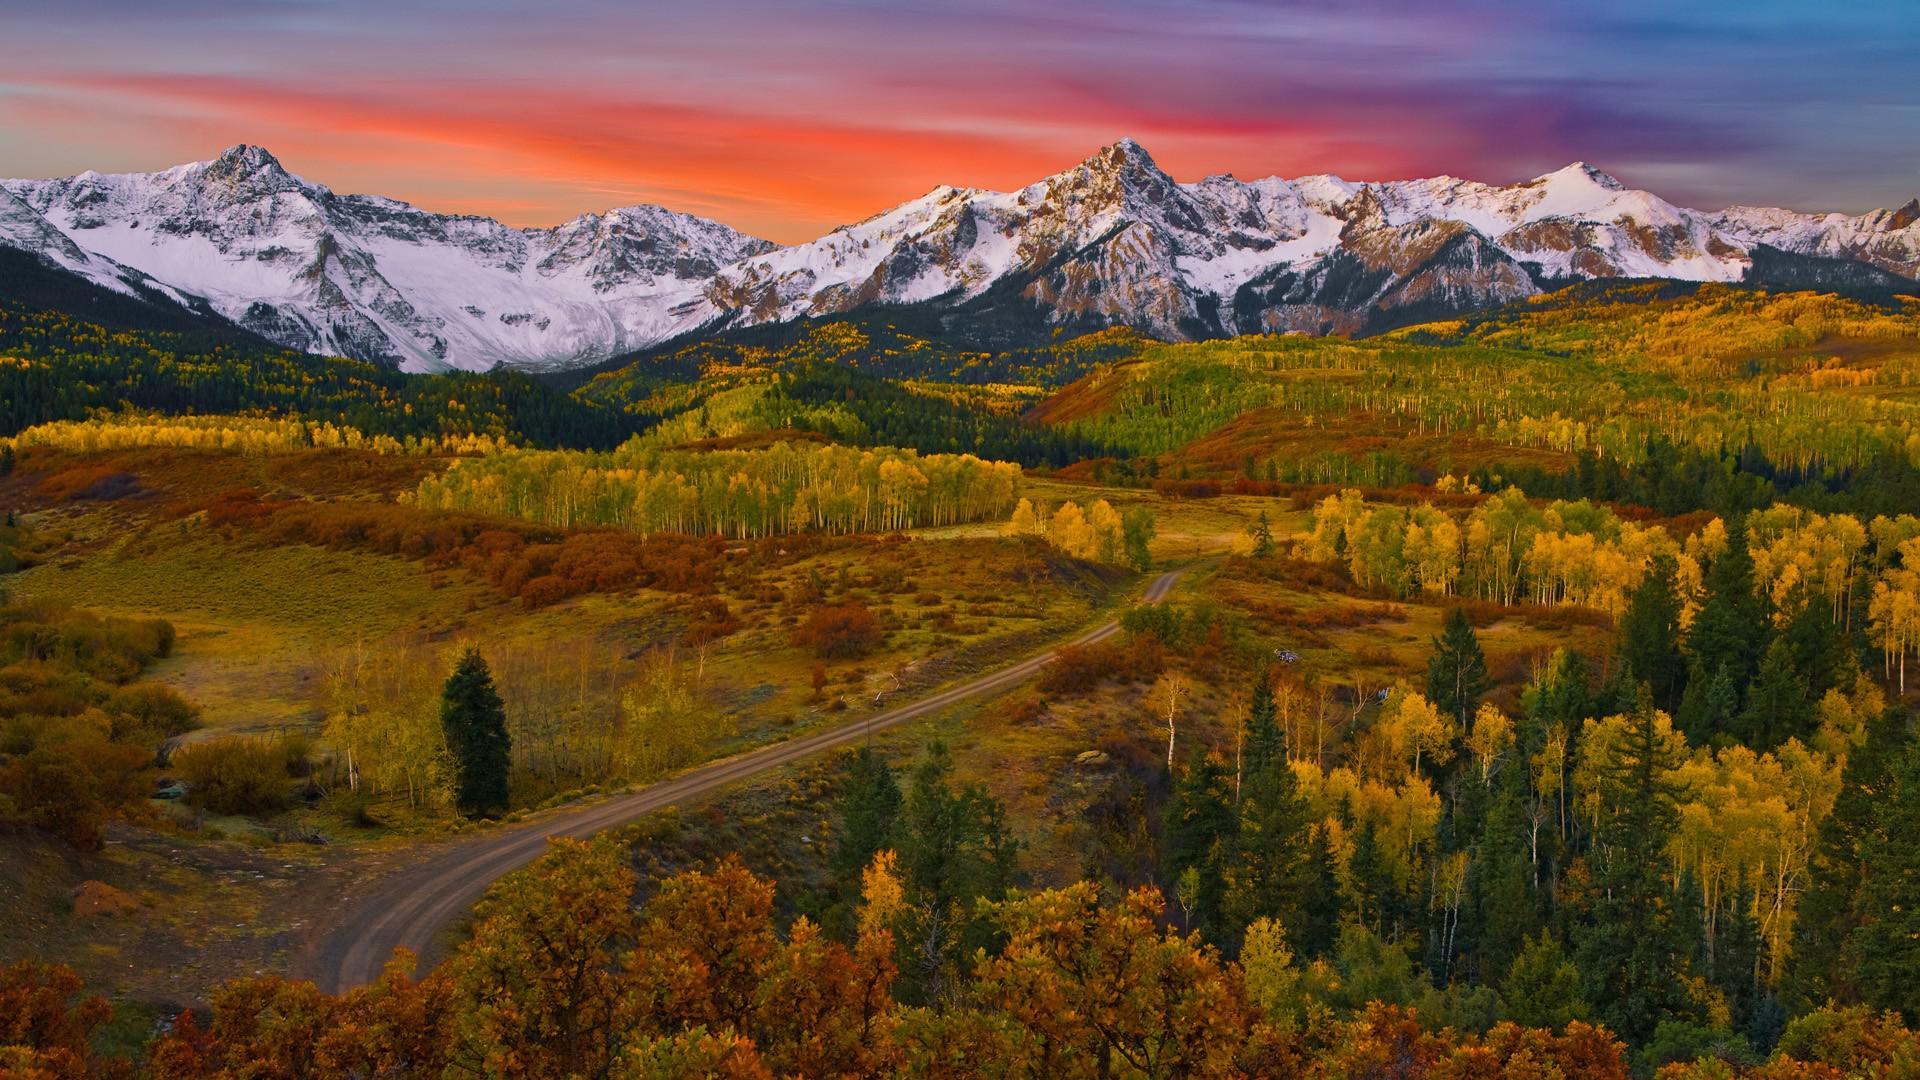 Max HD. Autumn Mountain Sunrise.9 kbytes, v.8.6